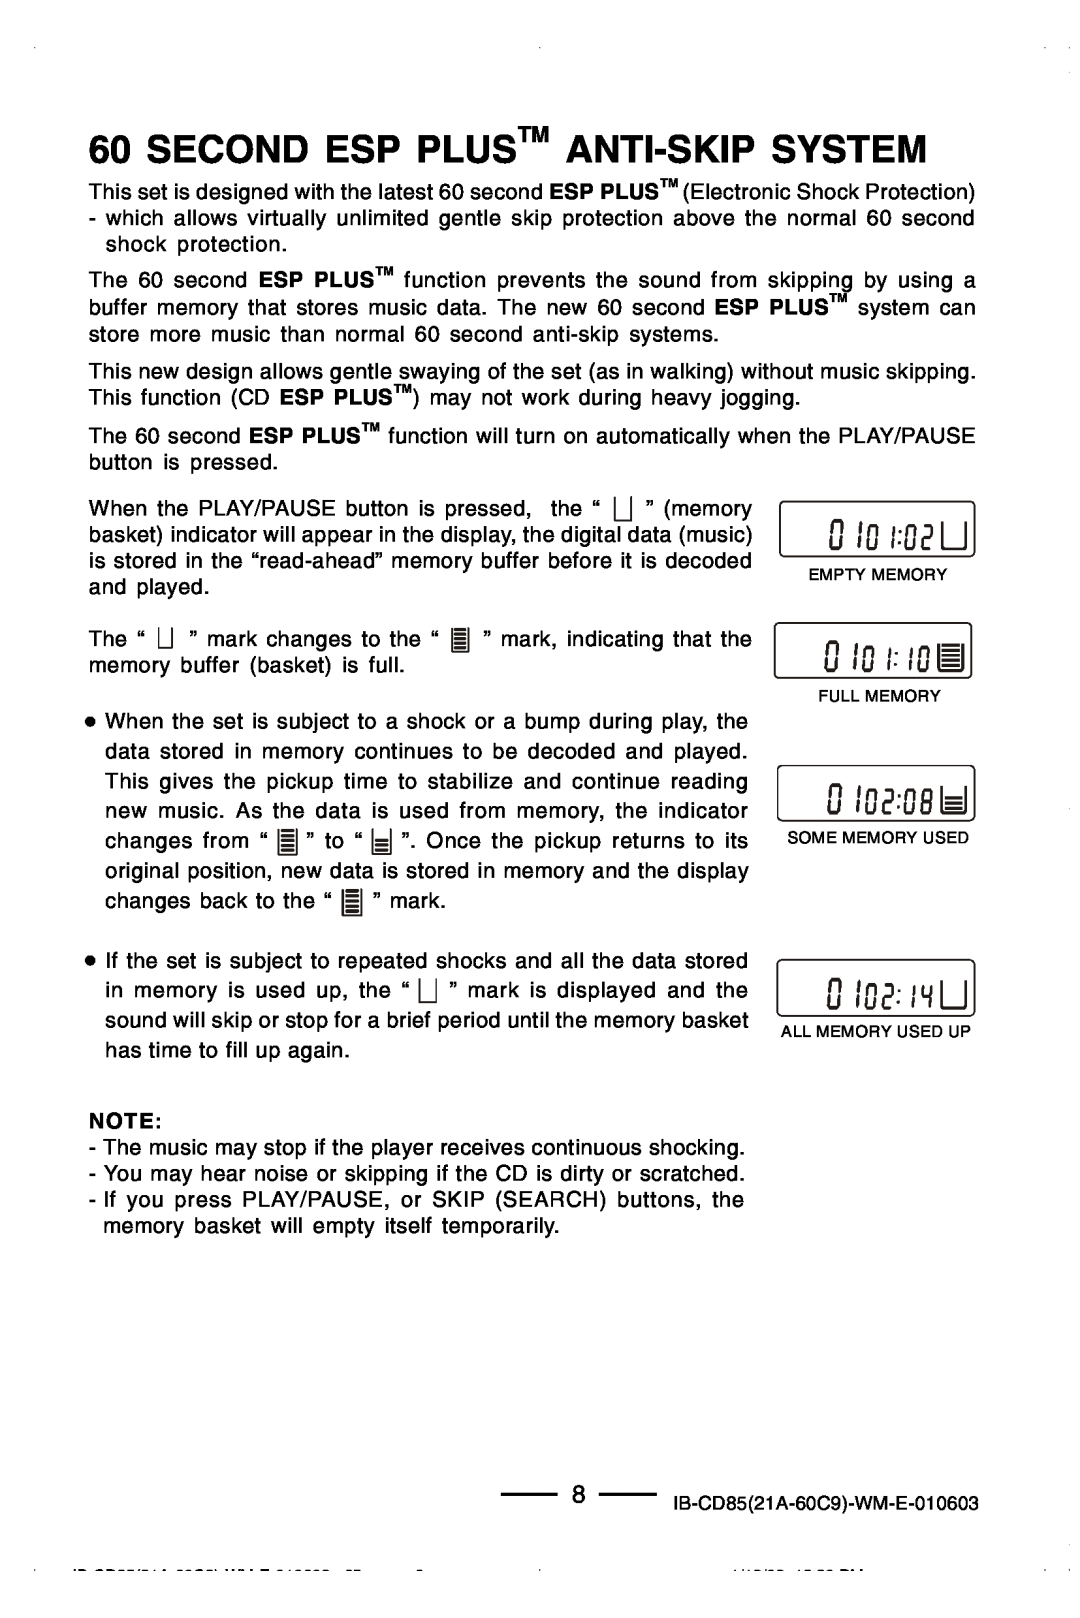 Lenoxx Electronics manual Second Esp Plustm Anti-Skipsystem, 8IB-CD8521A-60C9-WM-E-010603 